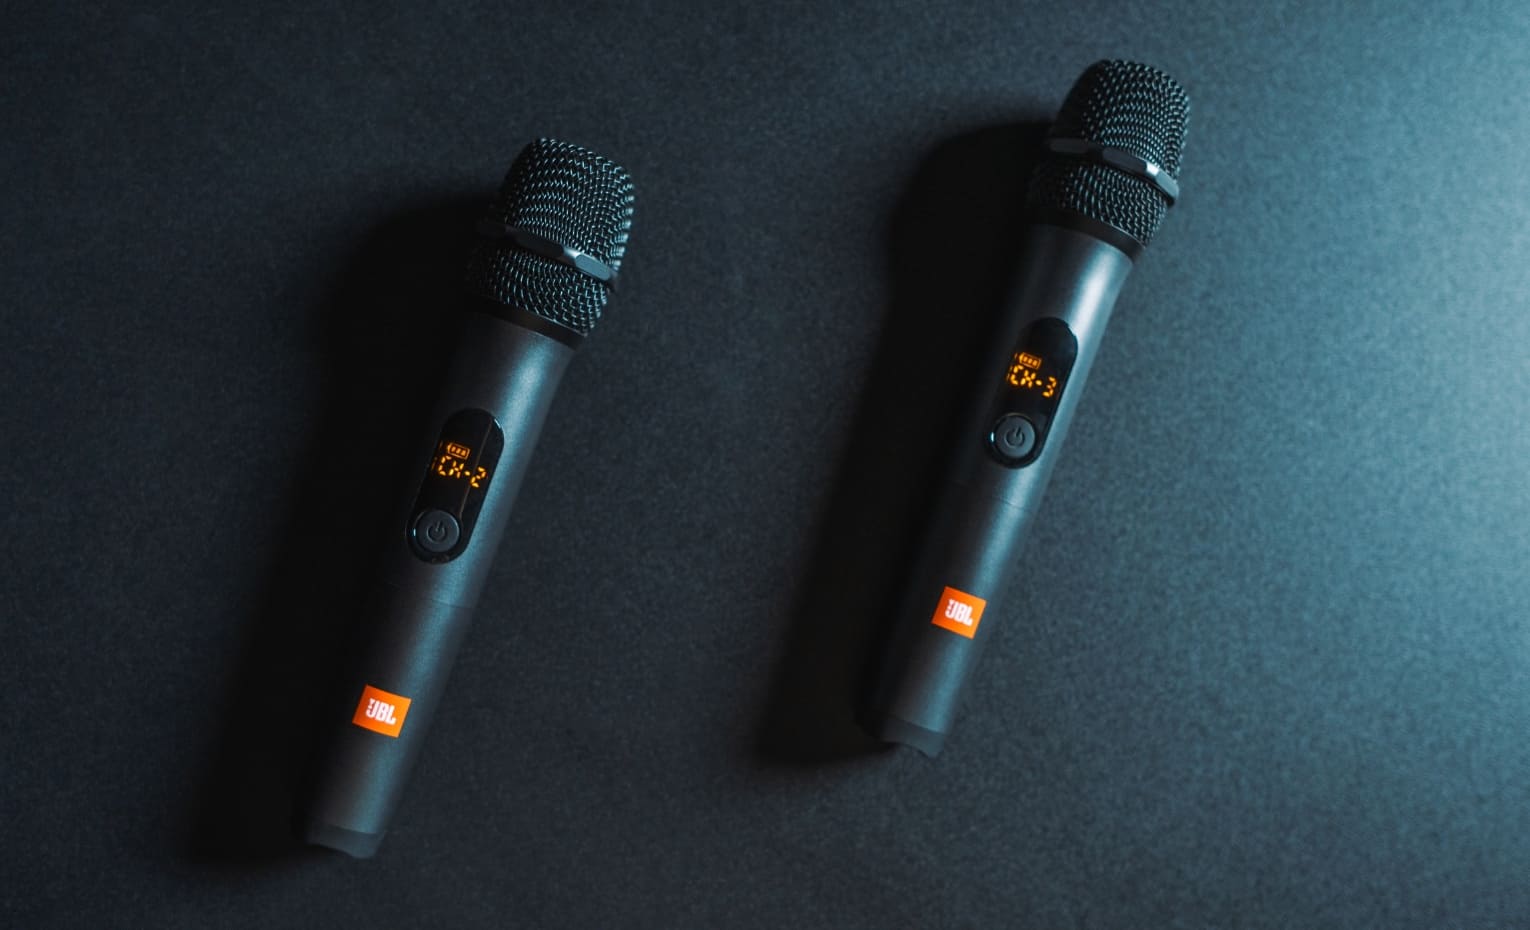 میکروفون JBL Wireless Microphone Set